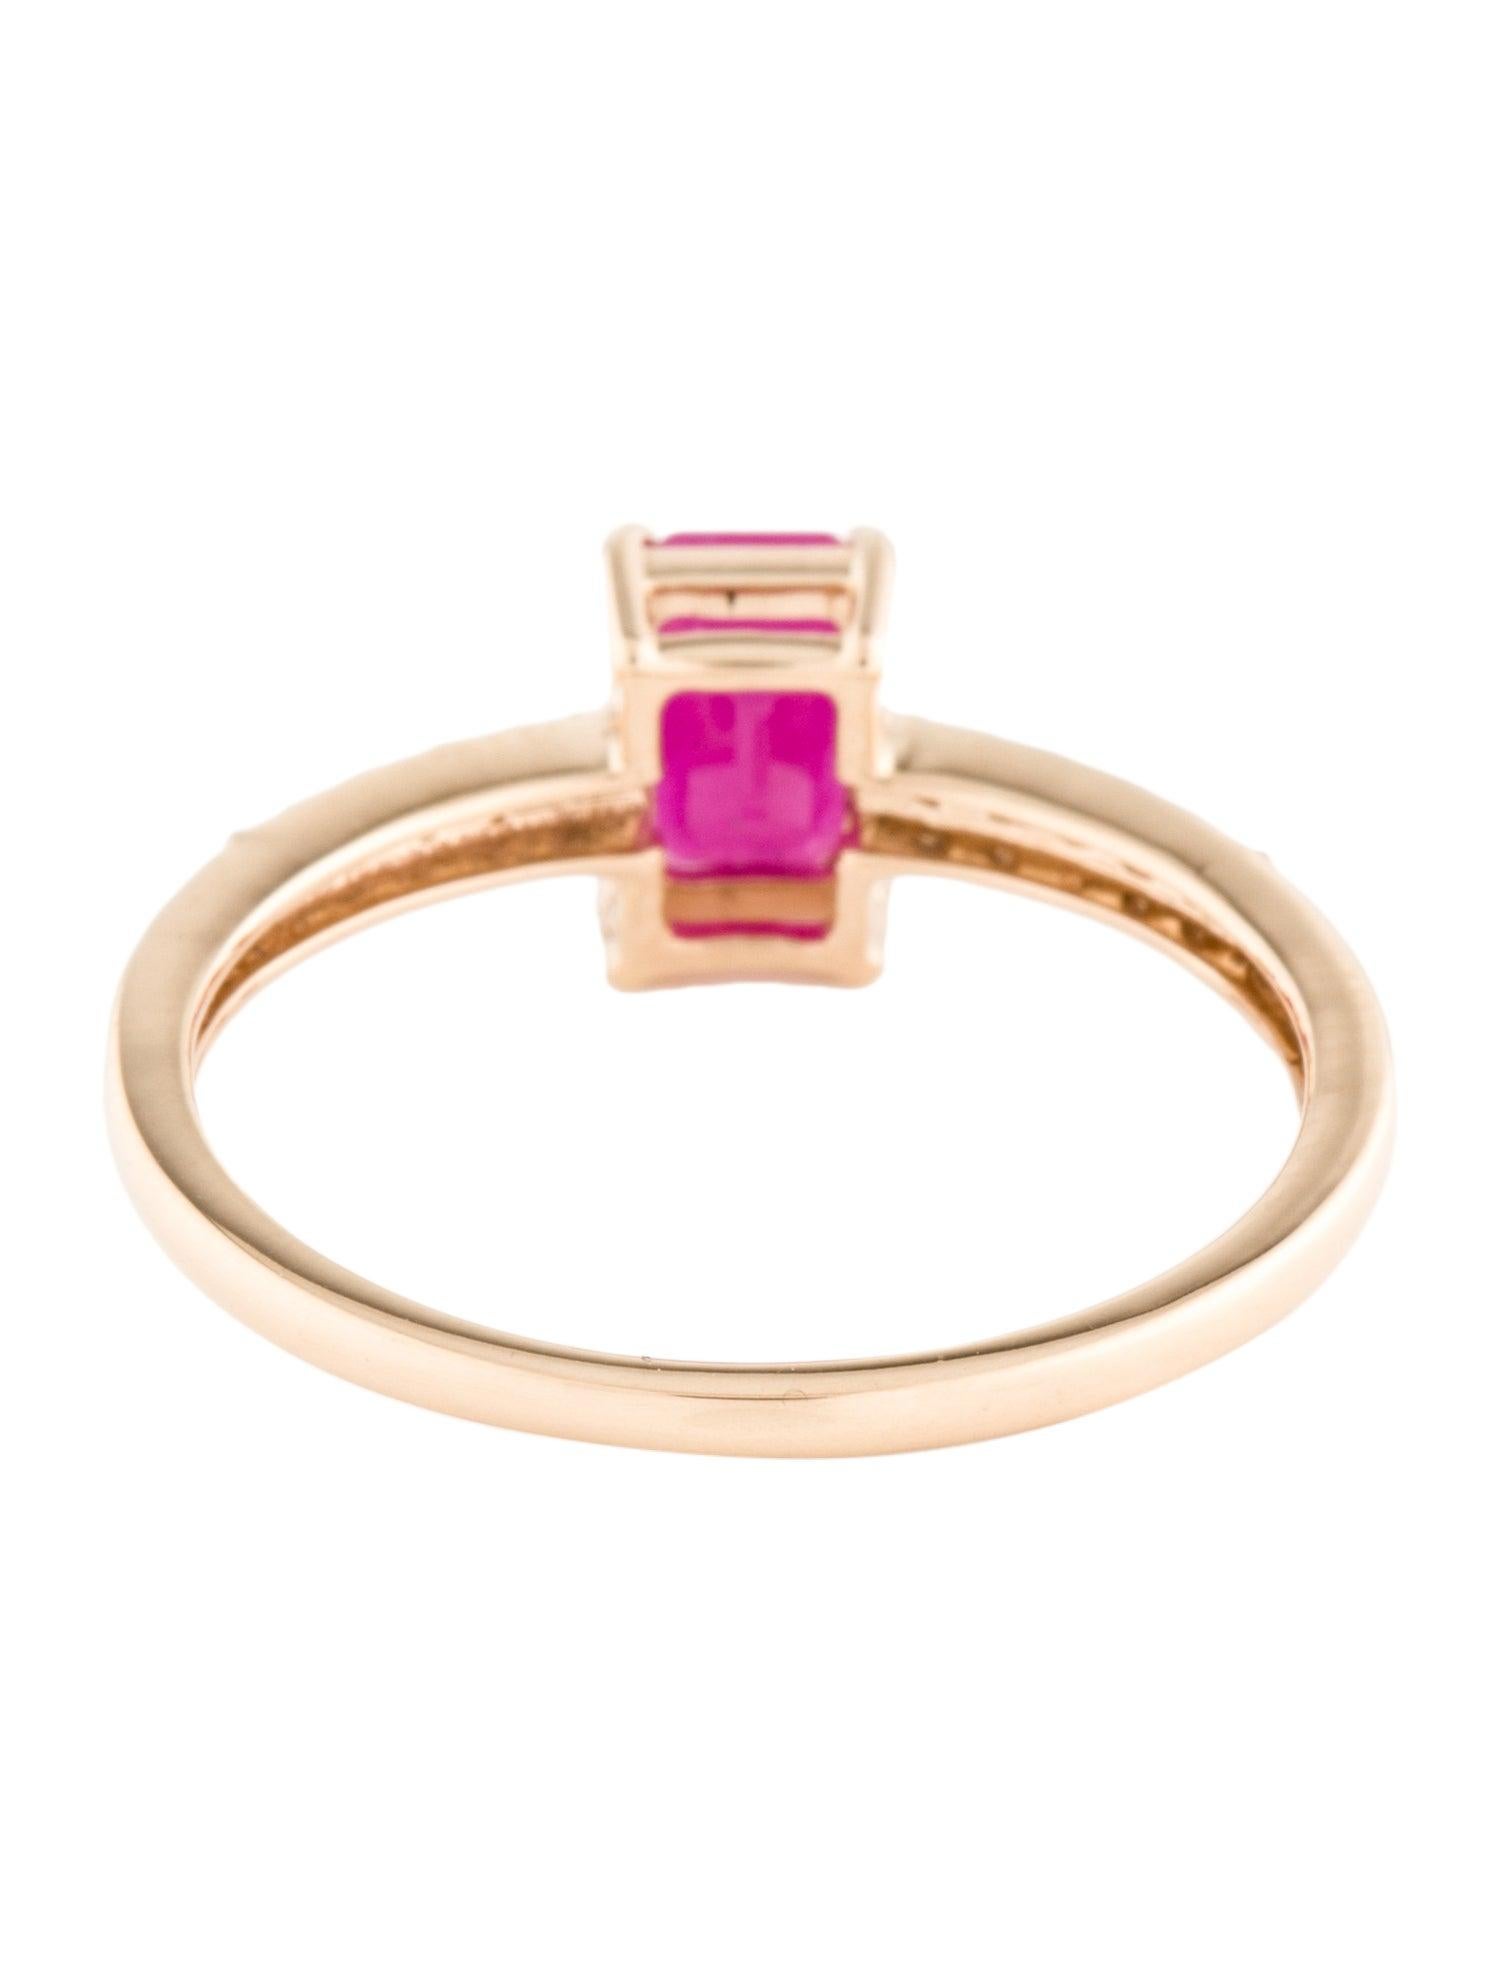 Brilliant Cut Dazzling 14K Ruby & Diamond Cocktail Ring - Size 8.75 - Fine Statement Jewelry For Sale